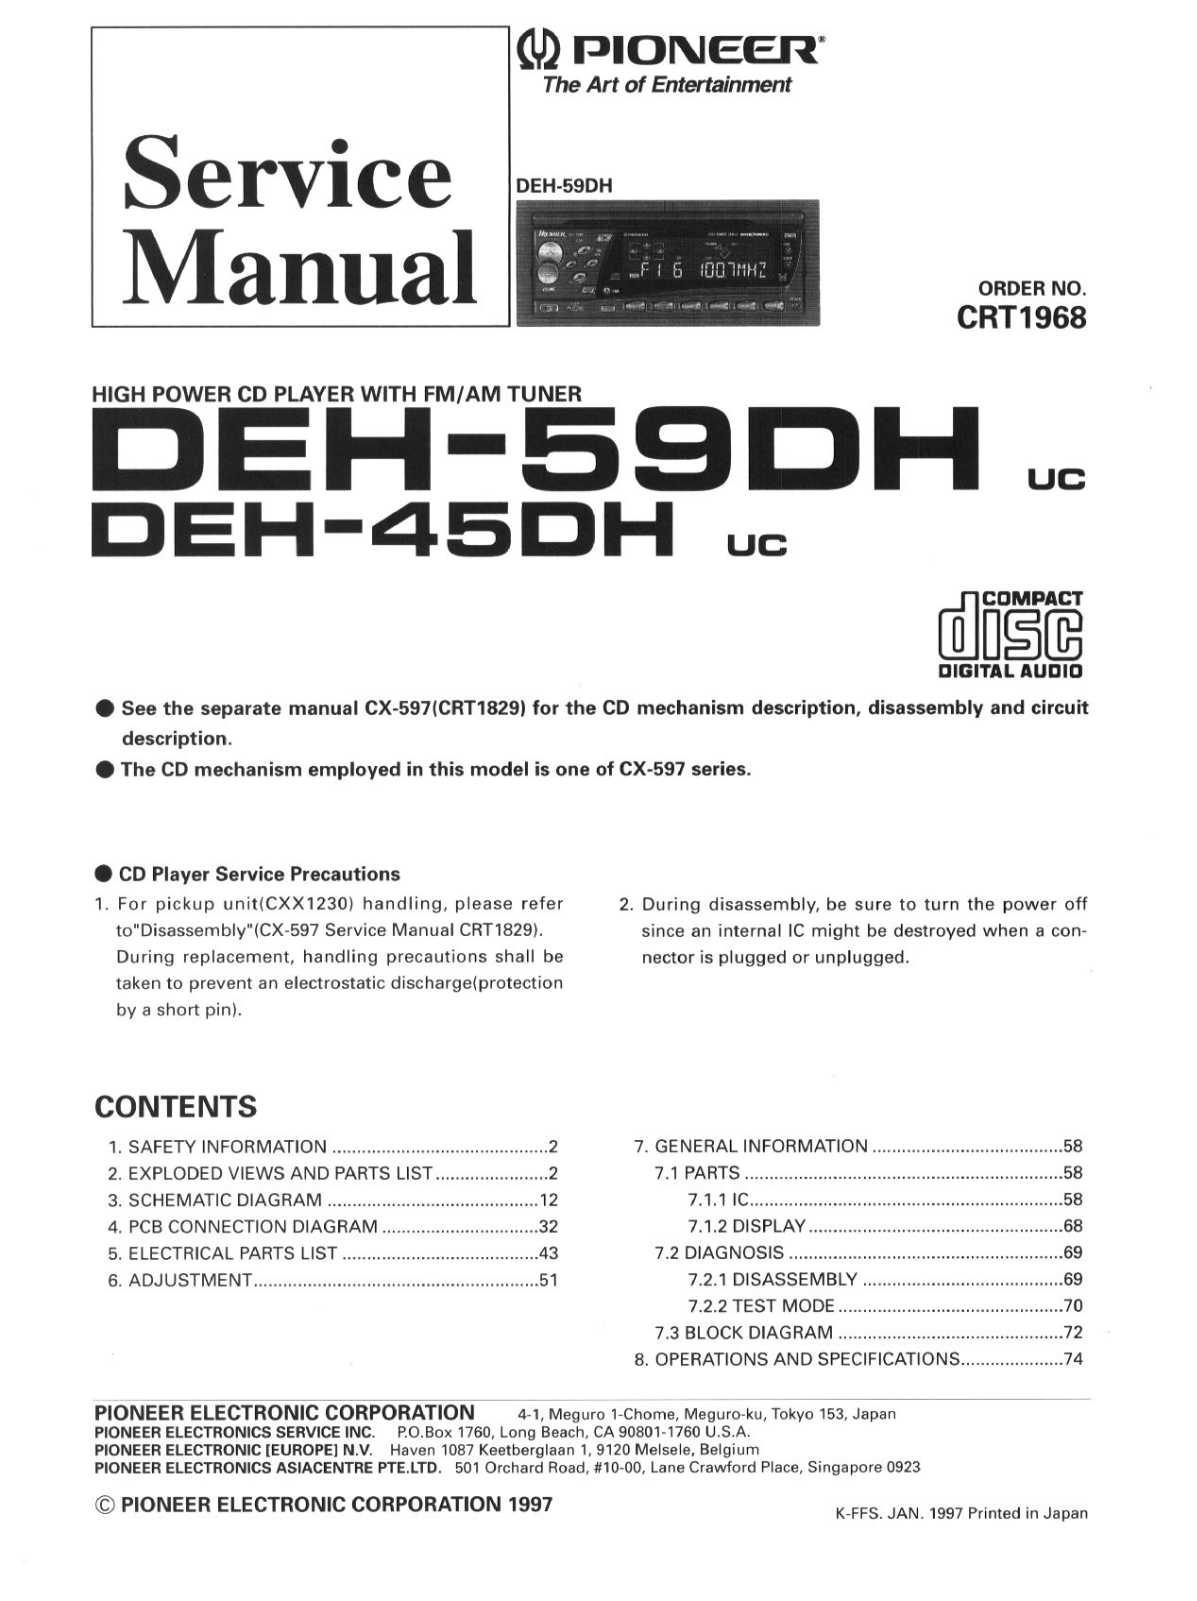 PIONEER DEH-59DH UC, DEH-45DH UC Service Manual